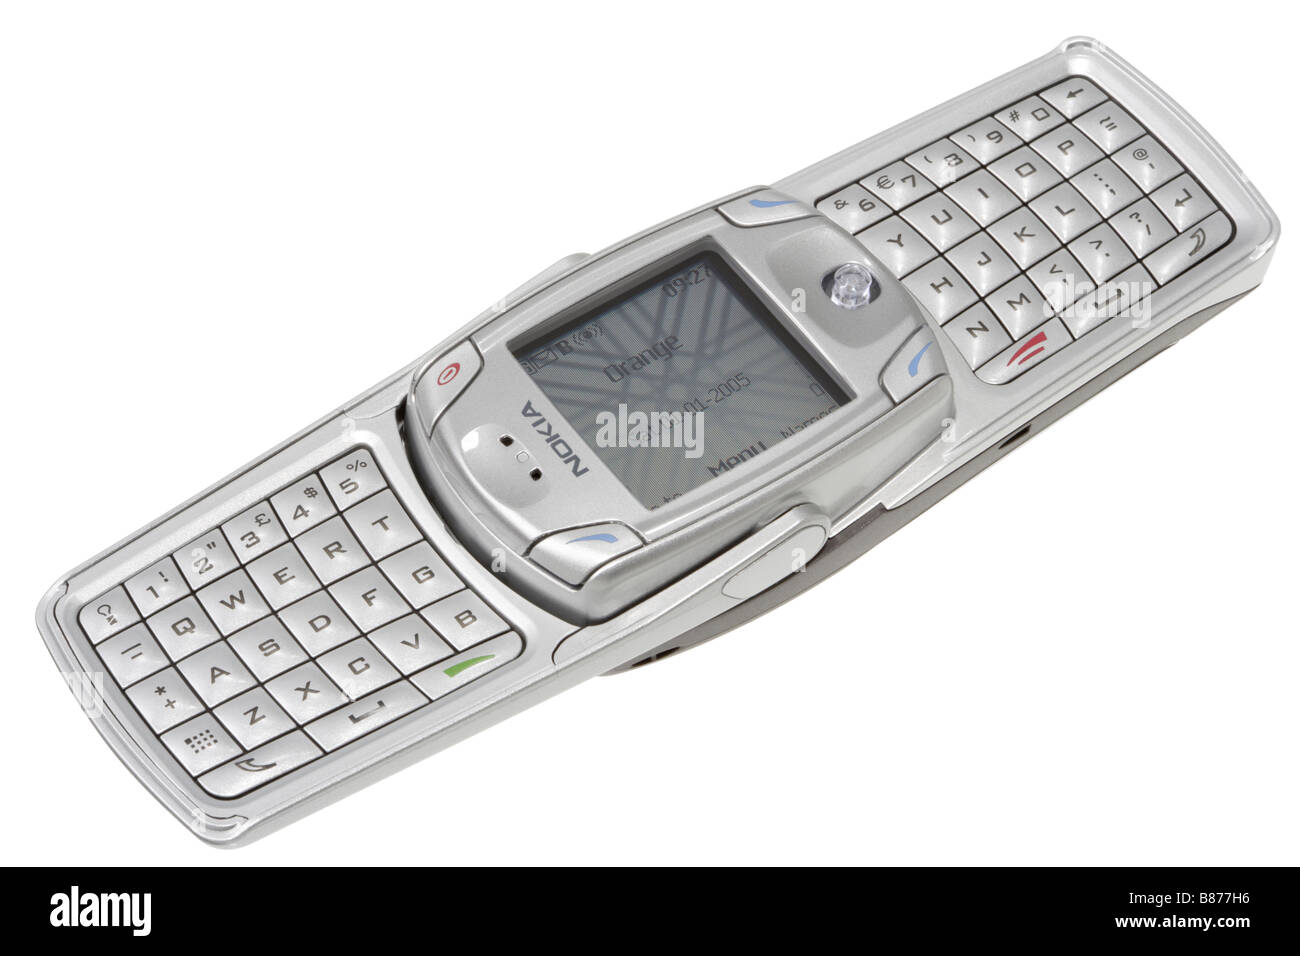 Nokia Keyboard Flip Phone